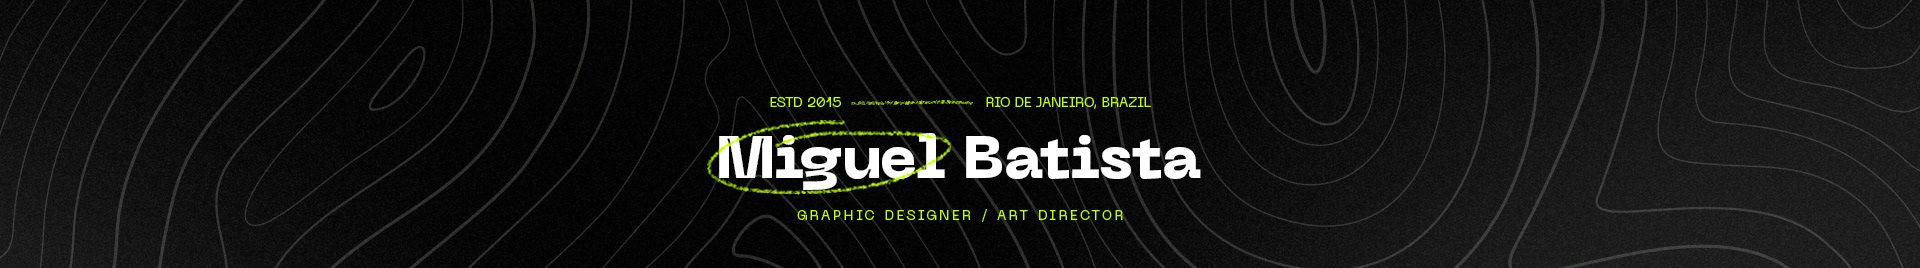 Bannière de profil de Miguel Batista